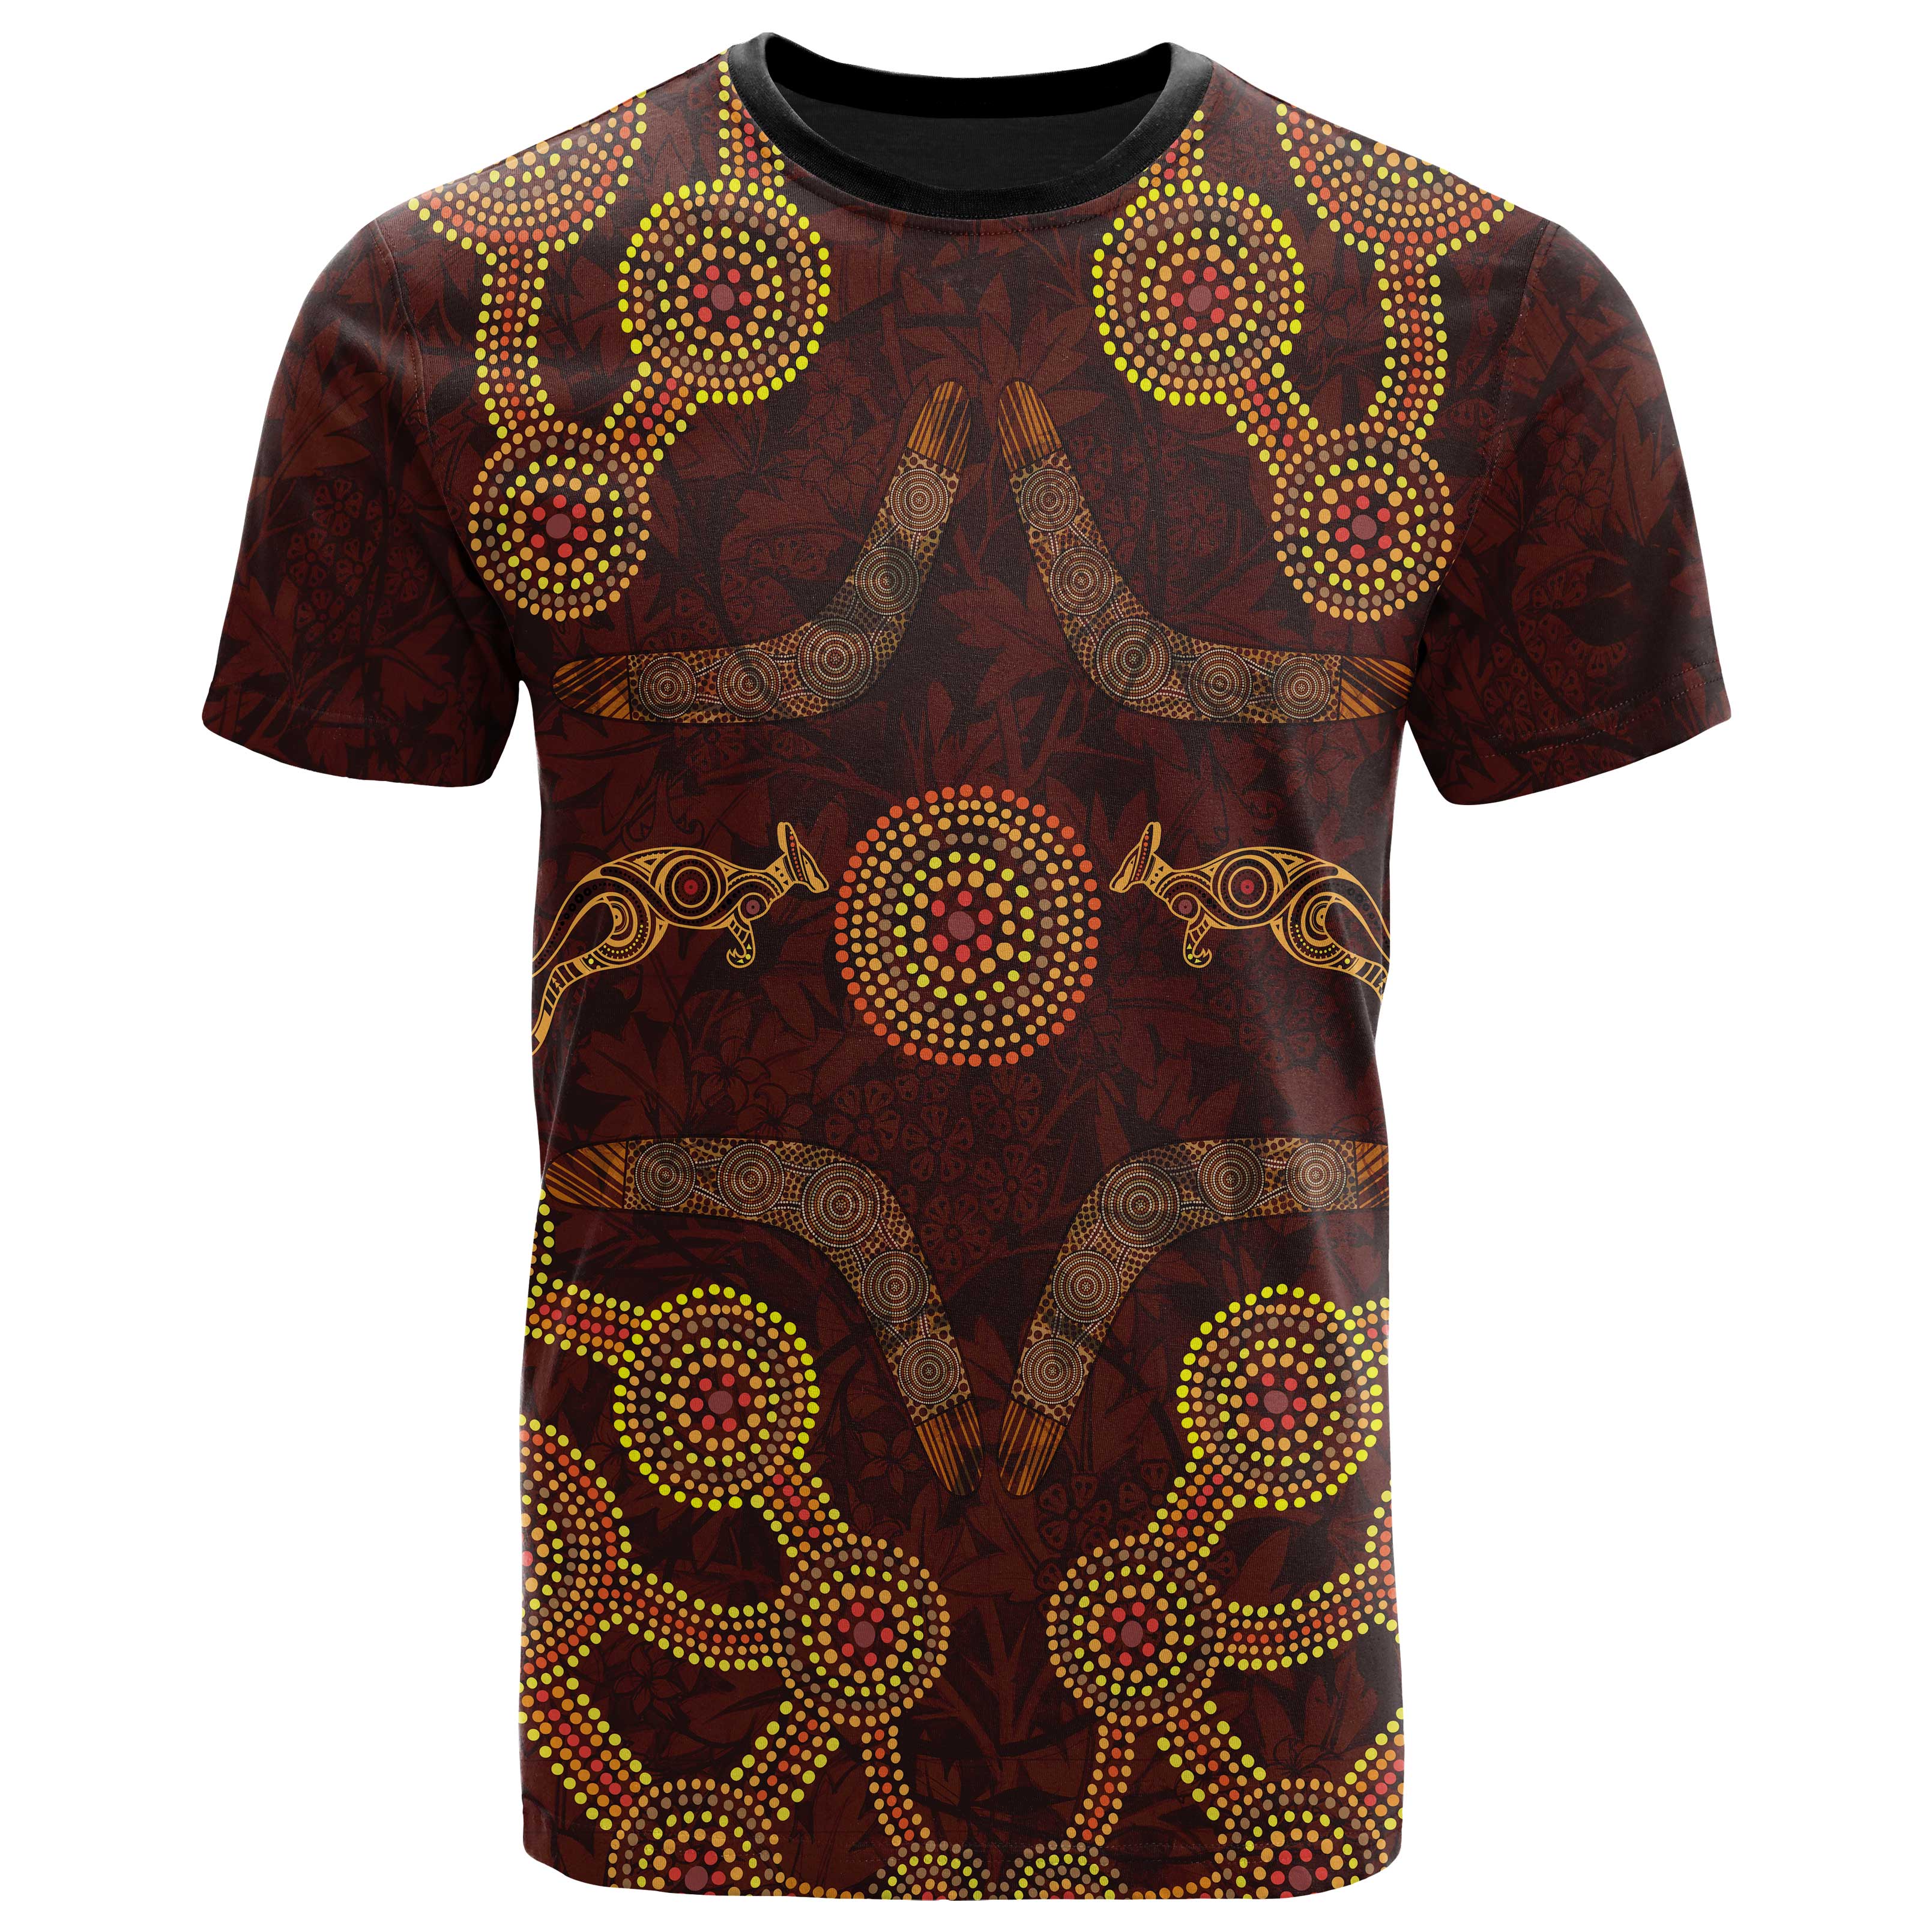 t-shirt-aboriginal-dot-pattern-boomerang